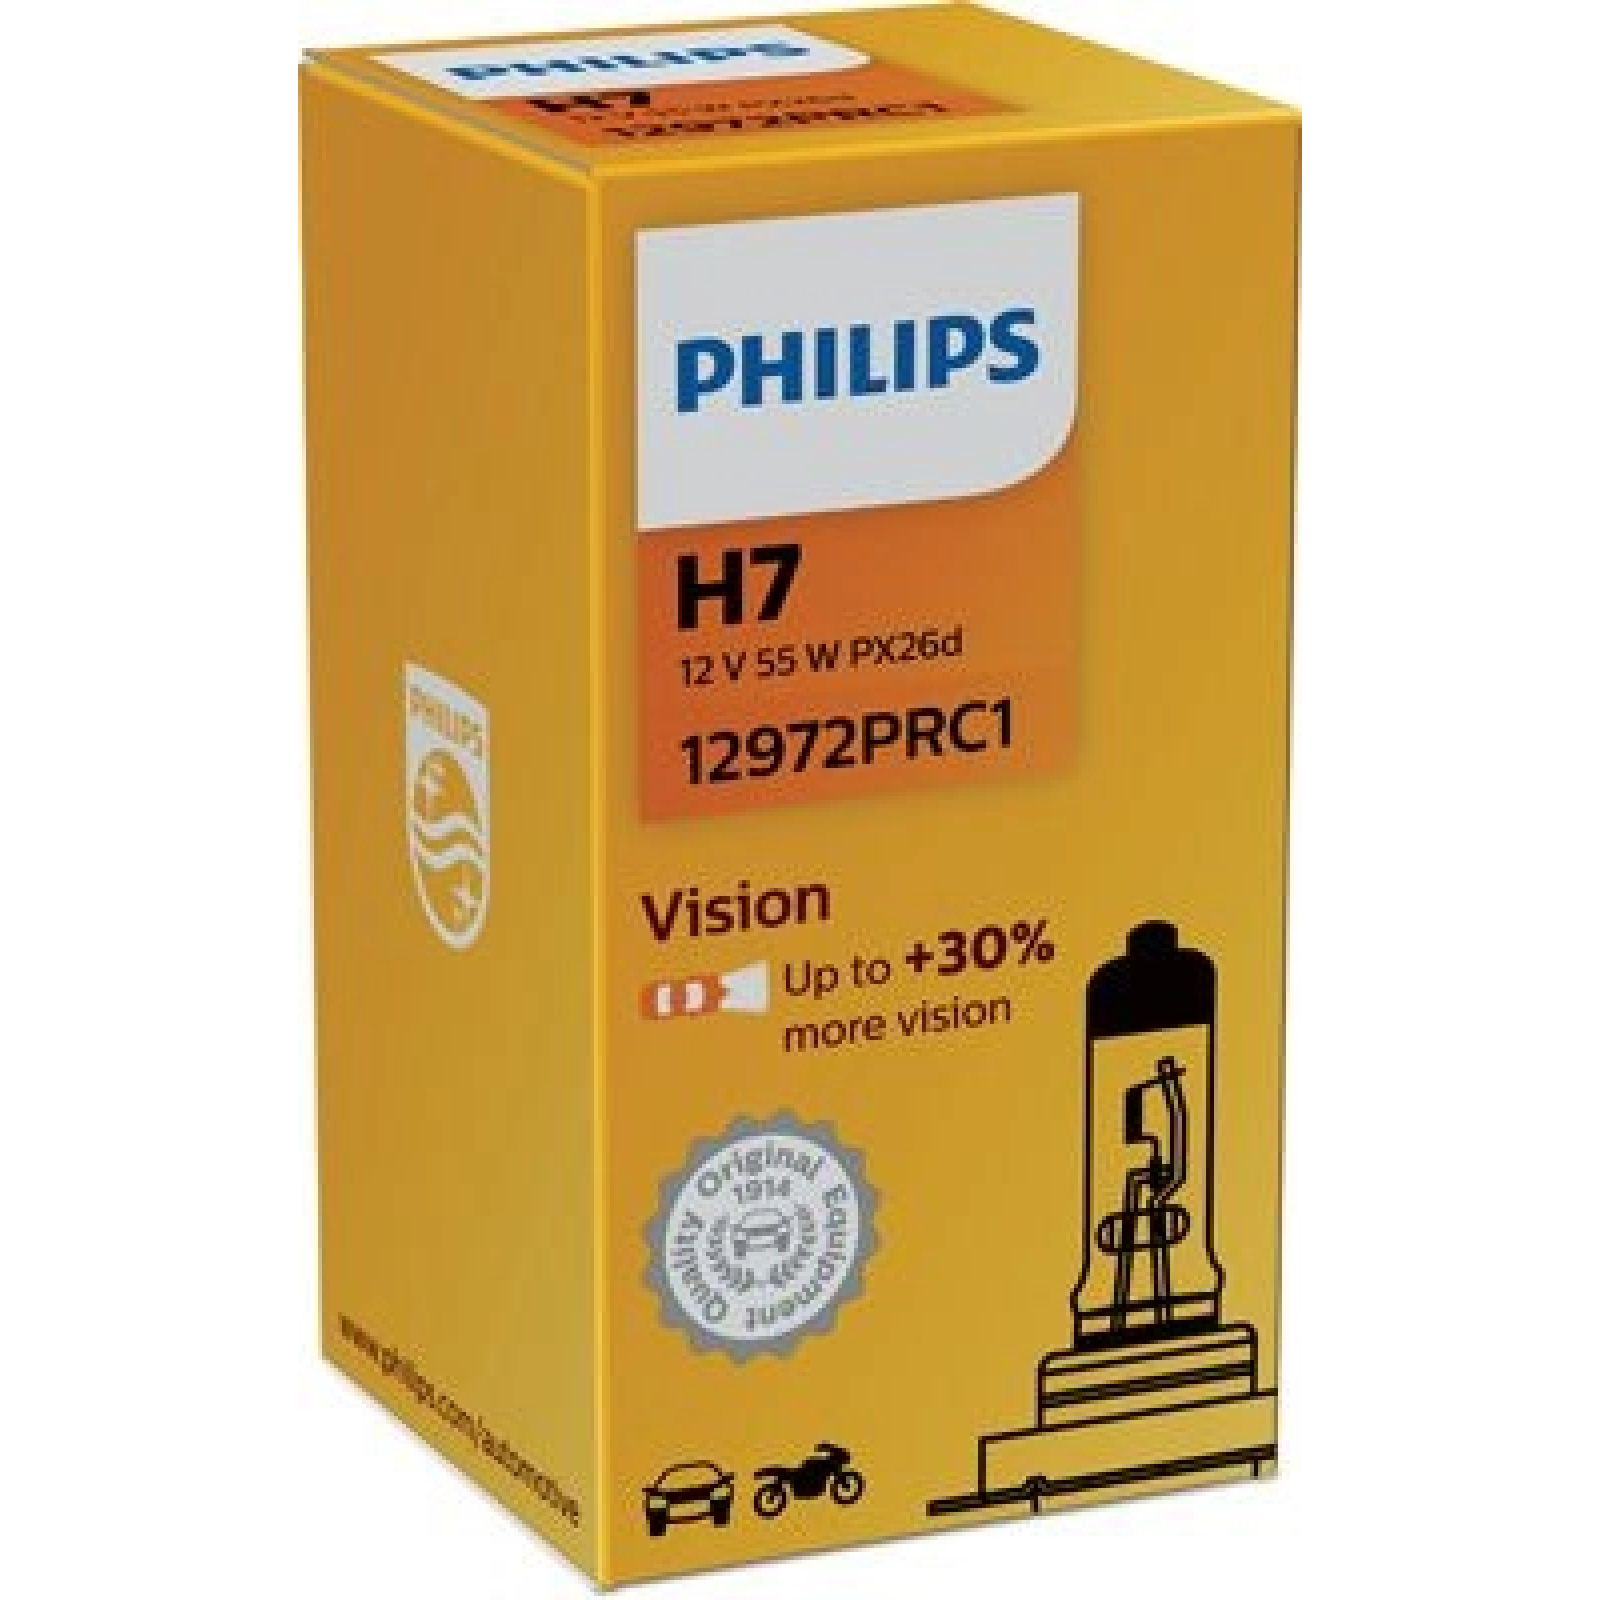 12972XVPB1 PHILIPS H7 12V 55W PX26d, Halogen Glühlampe